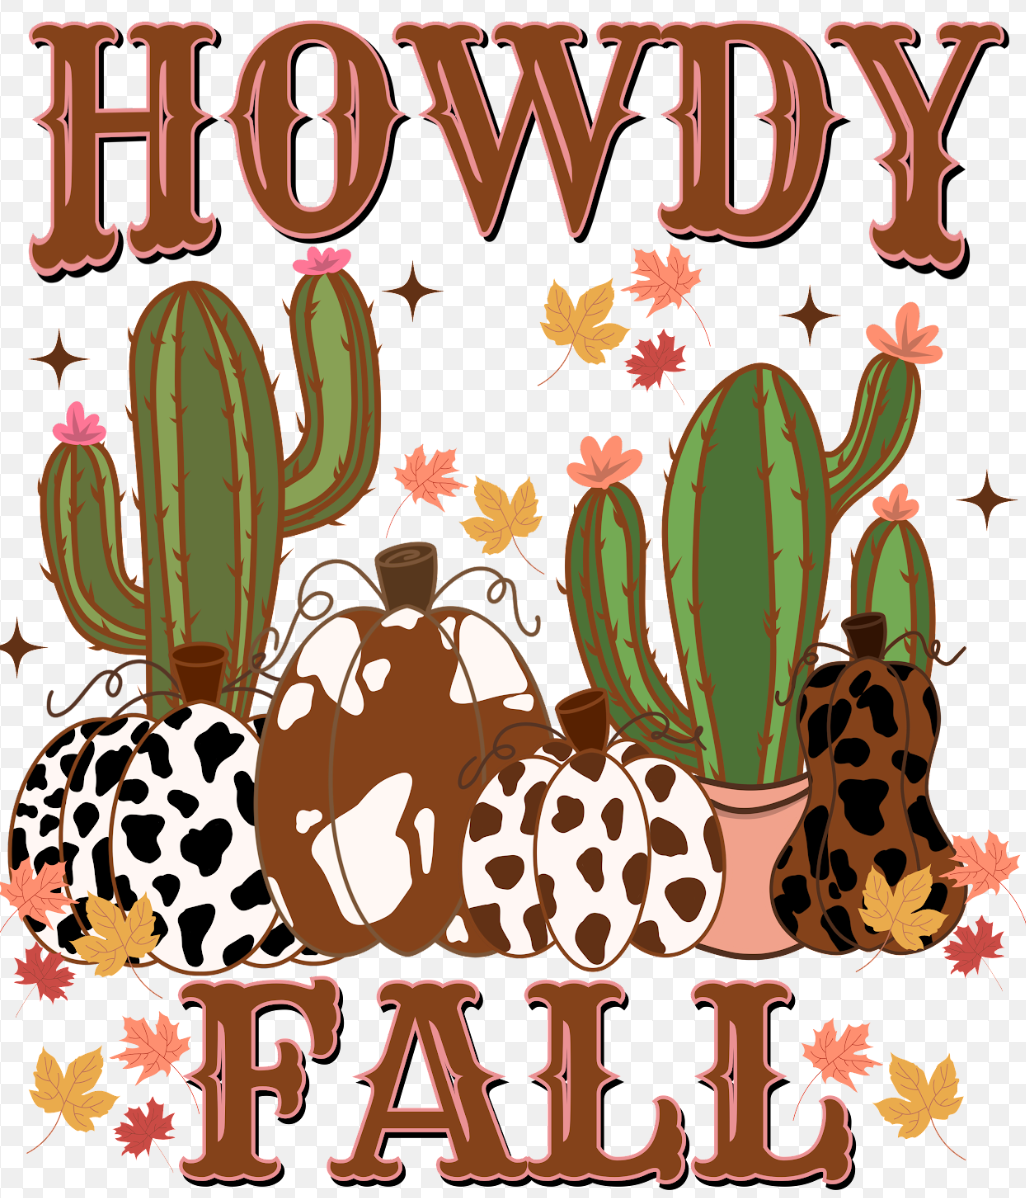 Howdy Fall youth